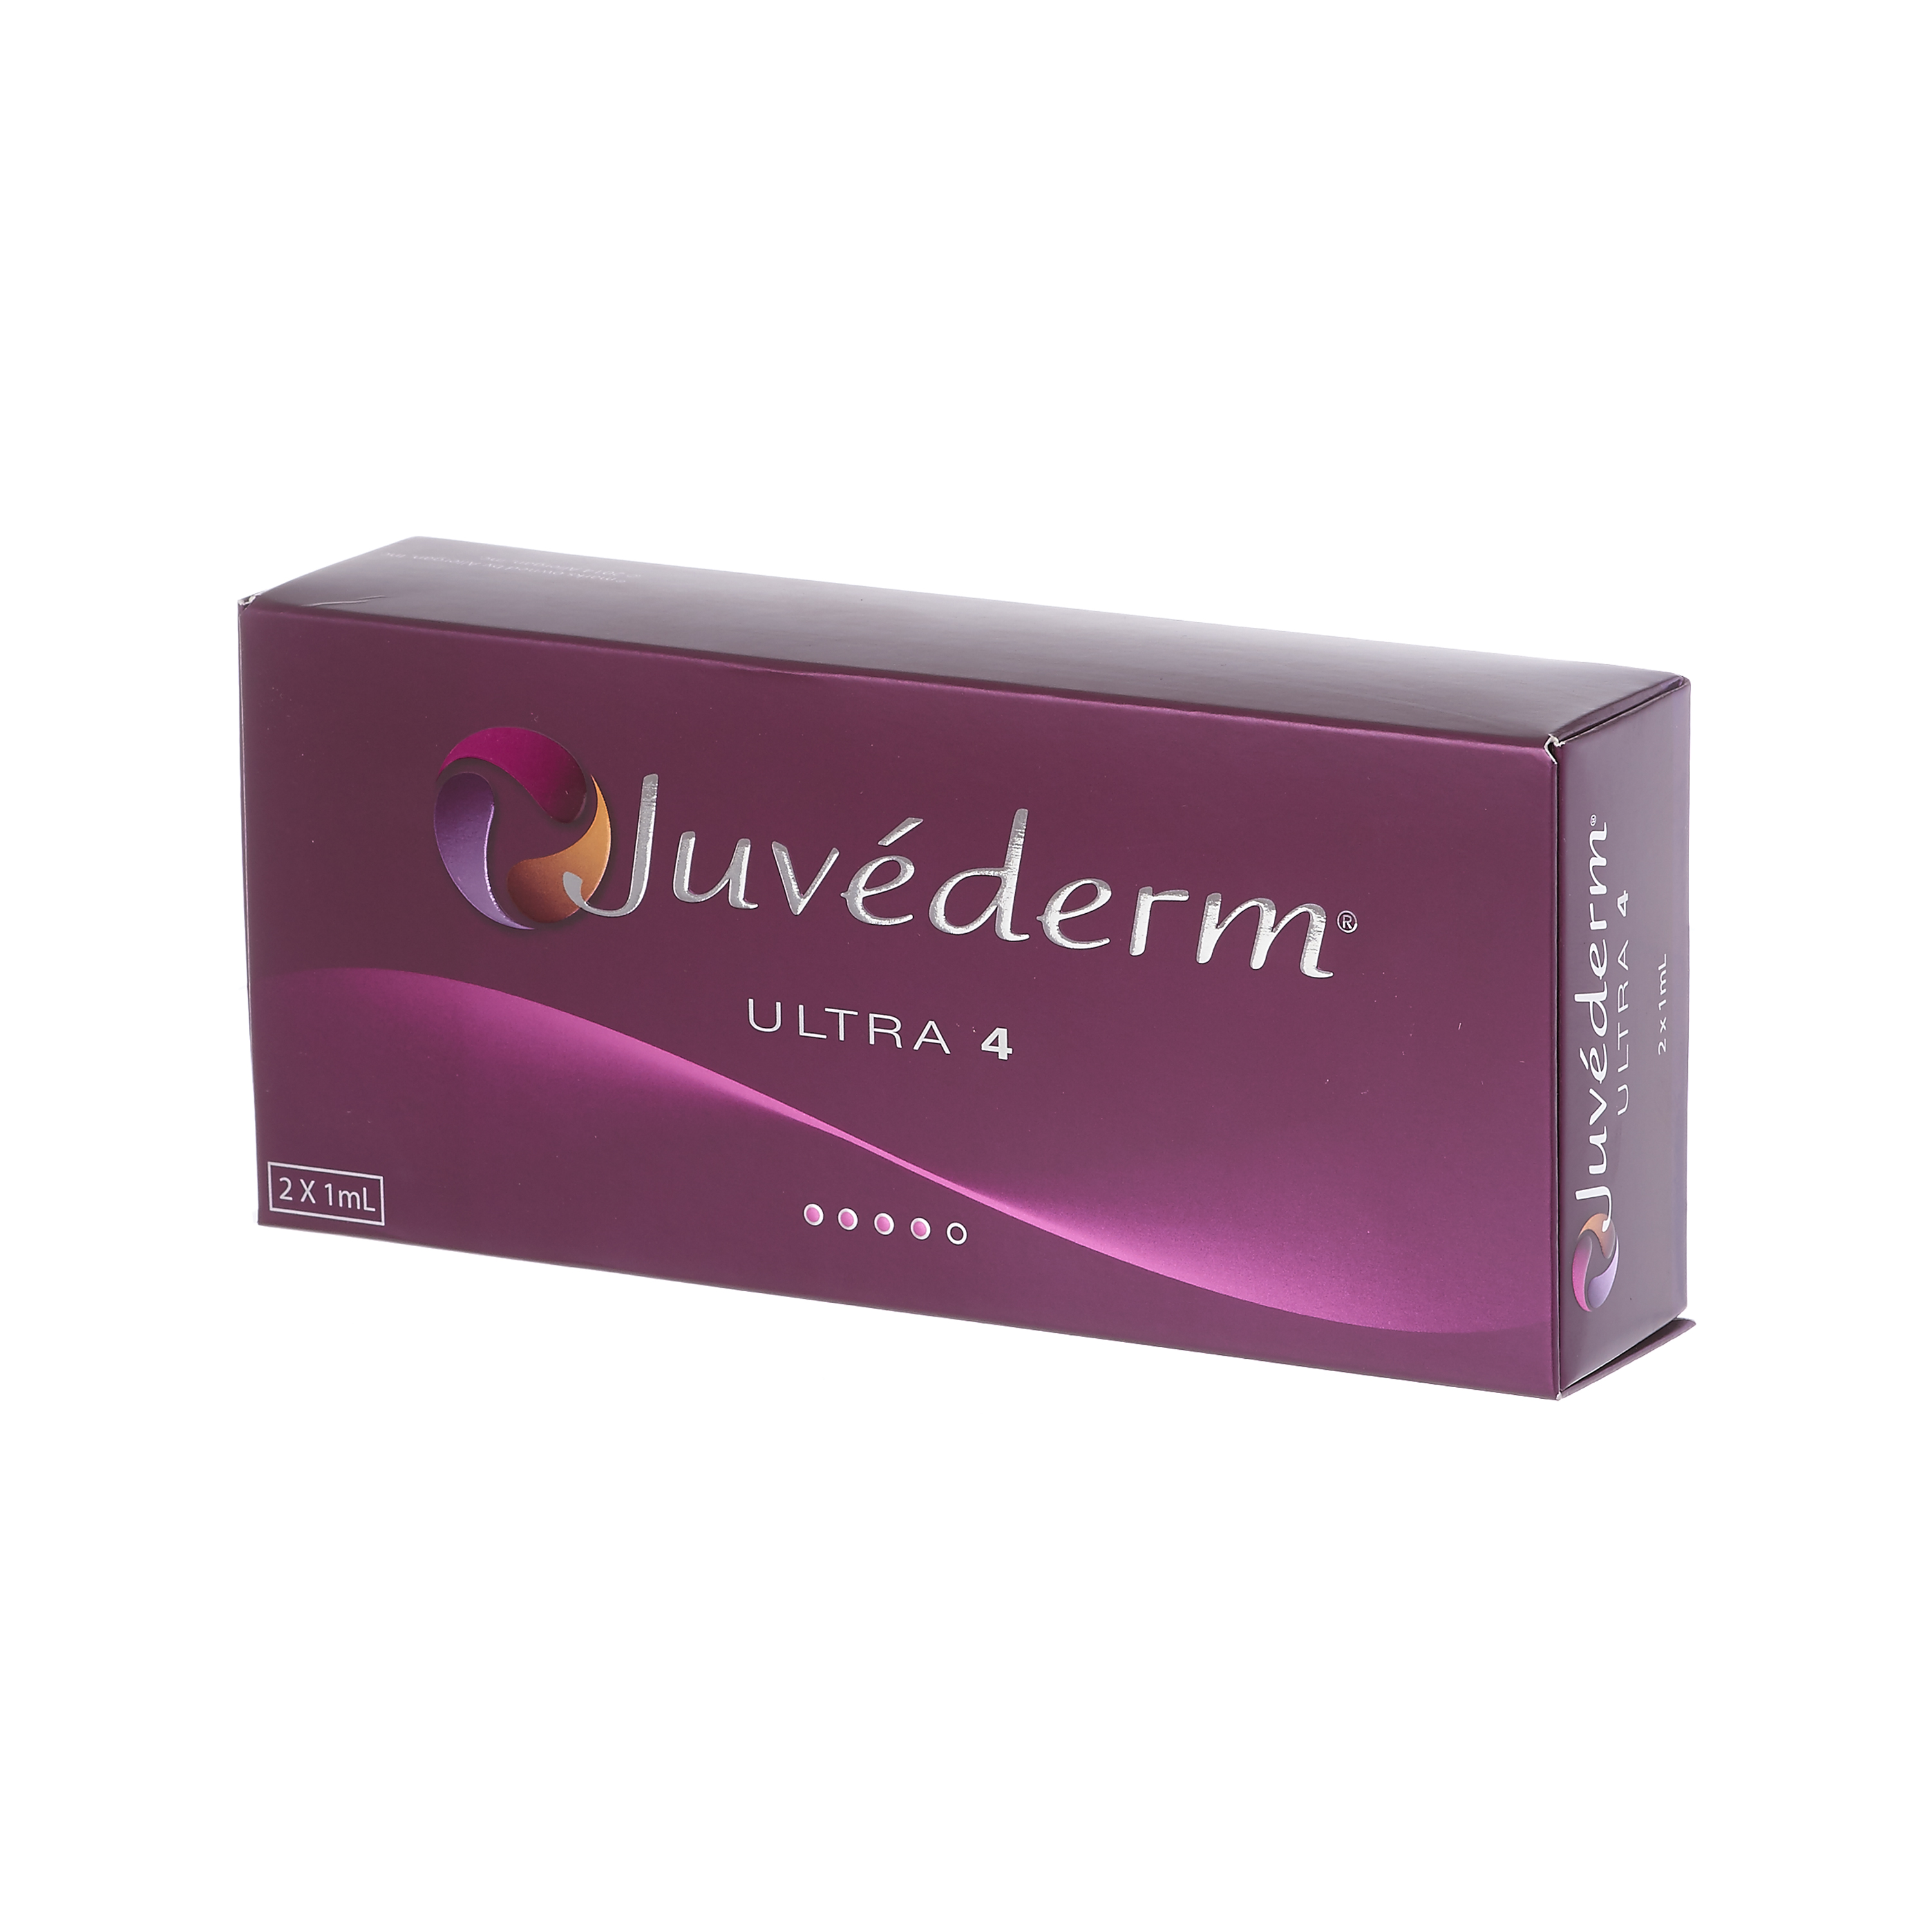 Juvederm Ultra 4 with Lidocaine 